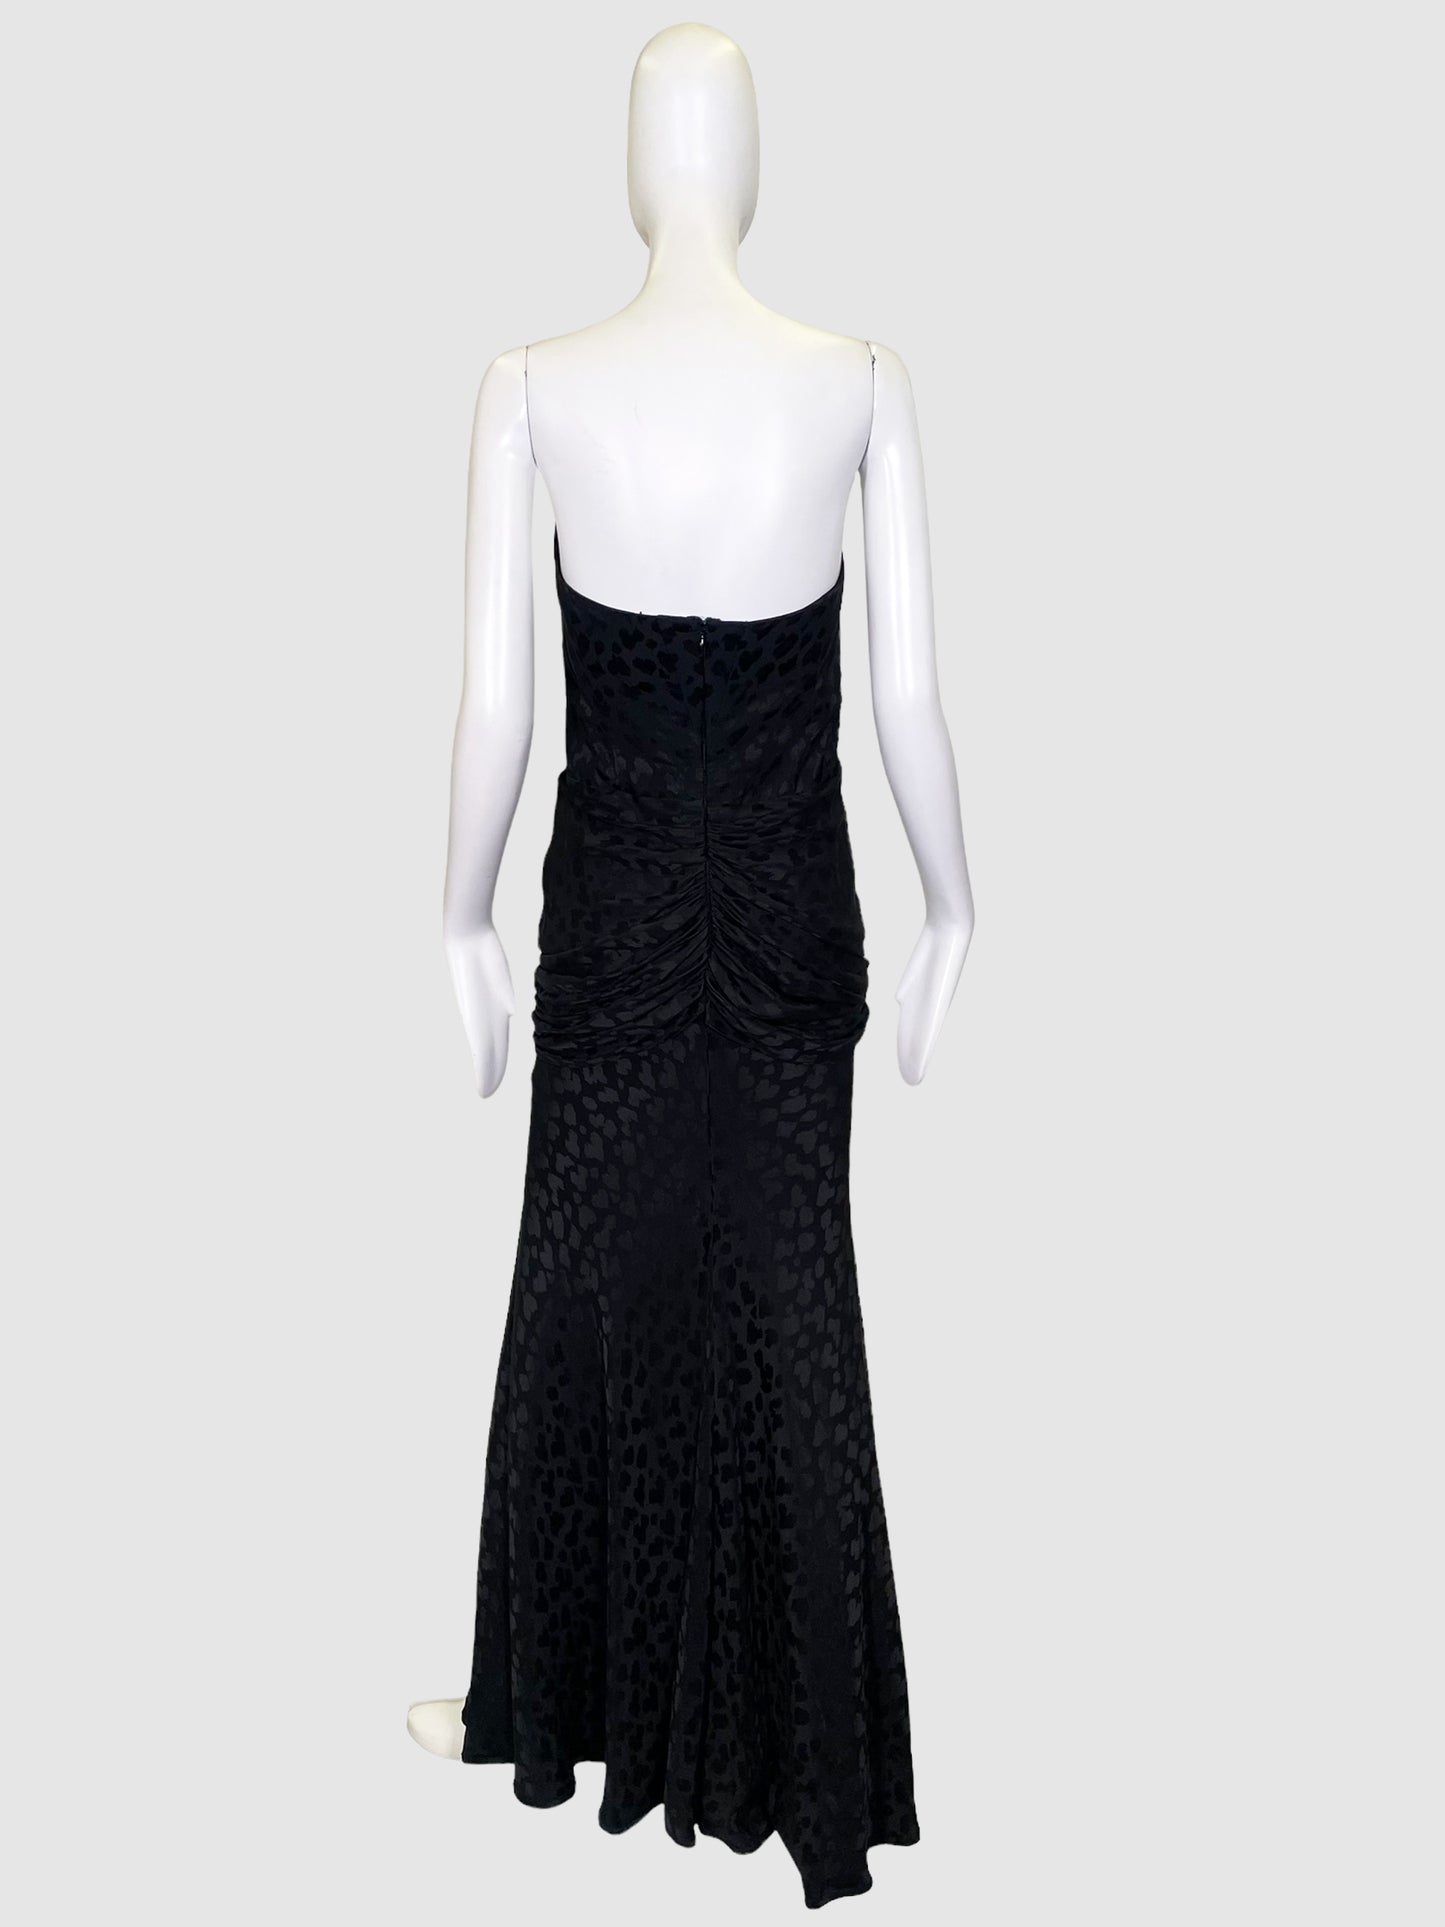 Wayne Clark Black Bustier Gown Dress - Size 8